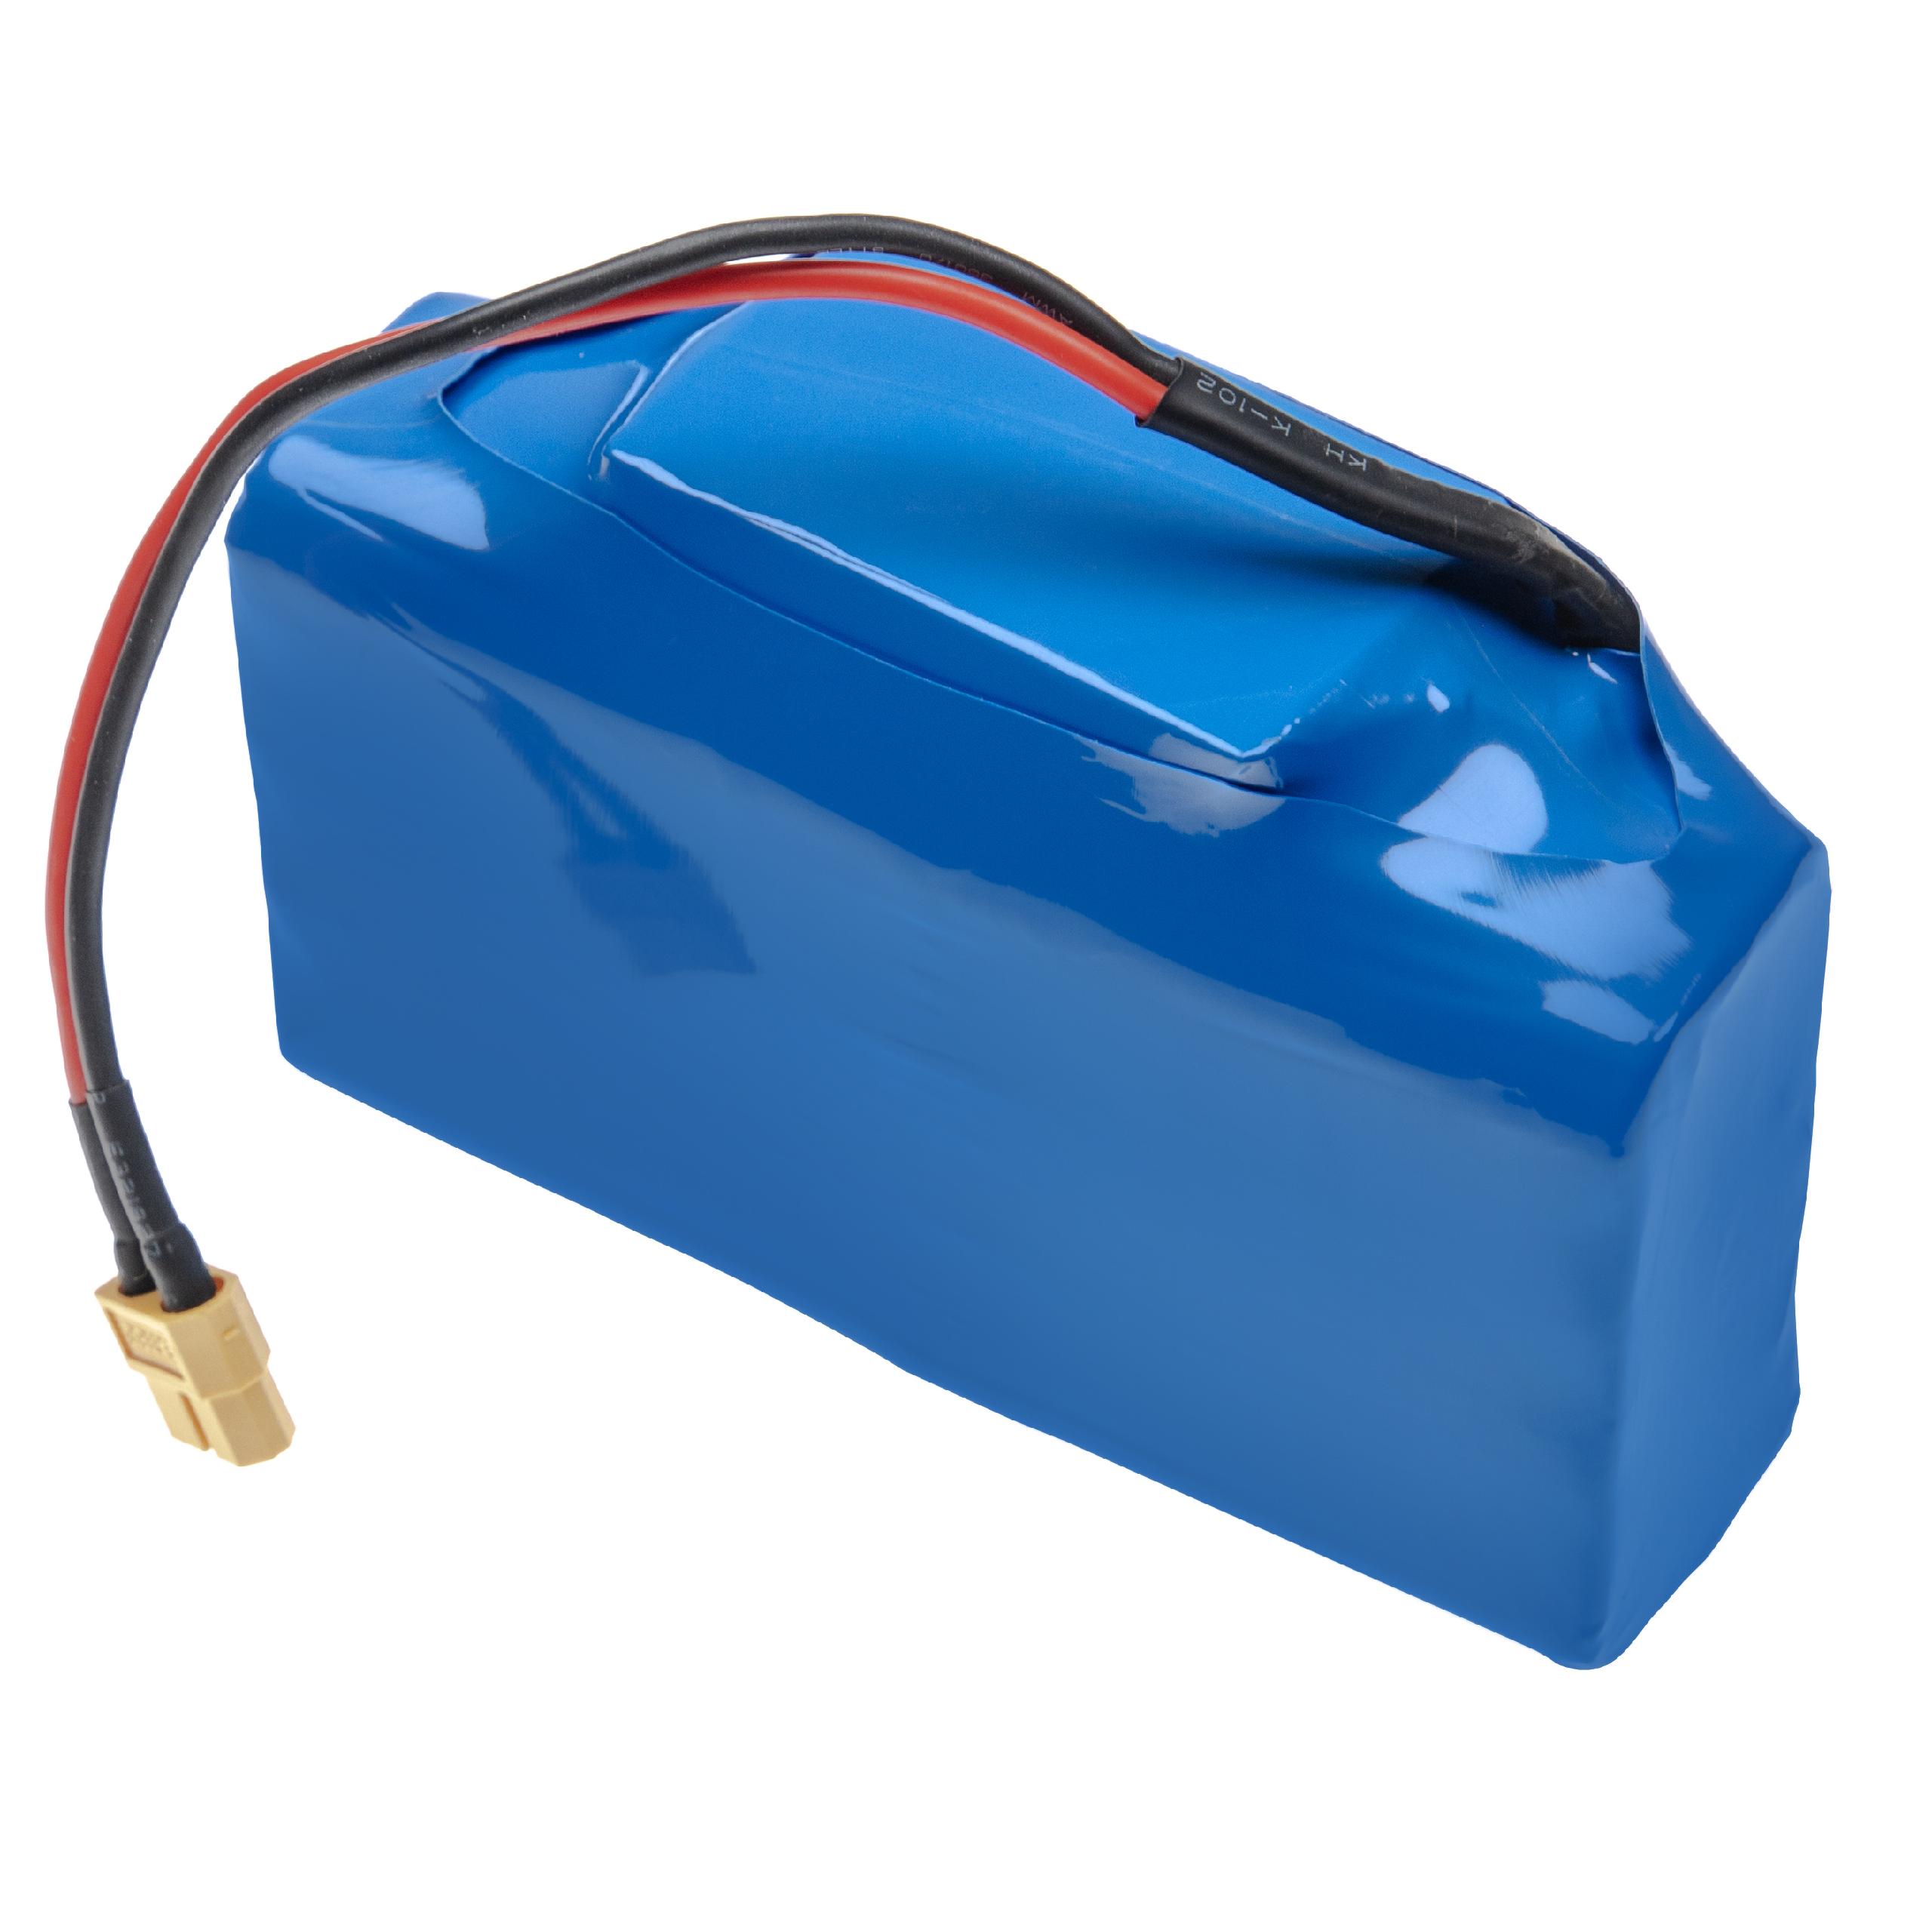 Batería reemplaza Bluewheel 10IXR19/65-2, HPK-11 para aerotabla eléctrica Bluewheel - 6800 mAh 36 V Li-Ion